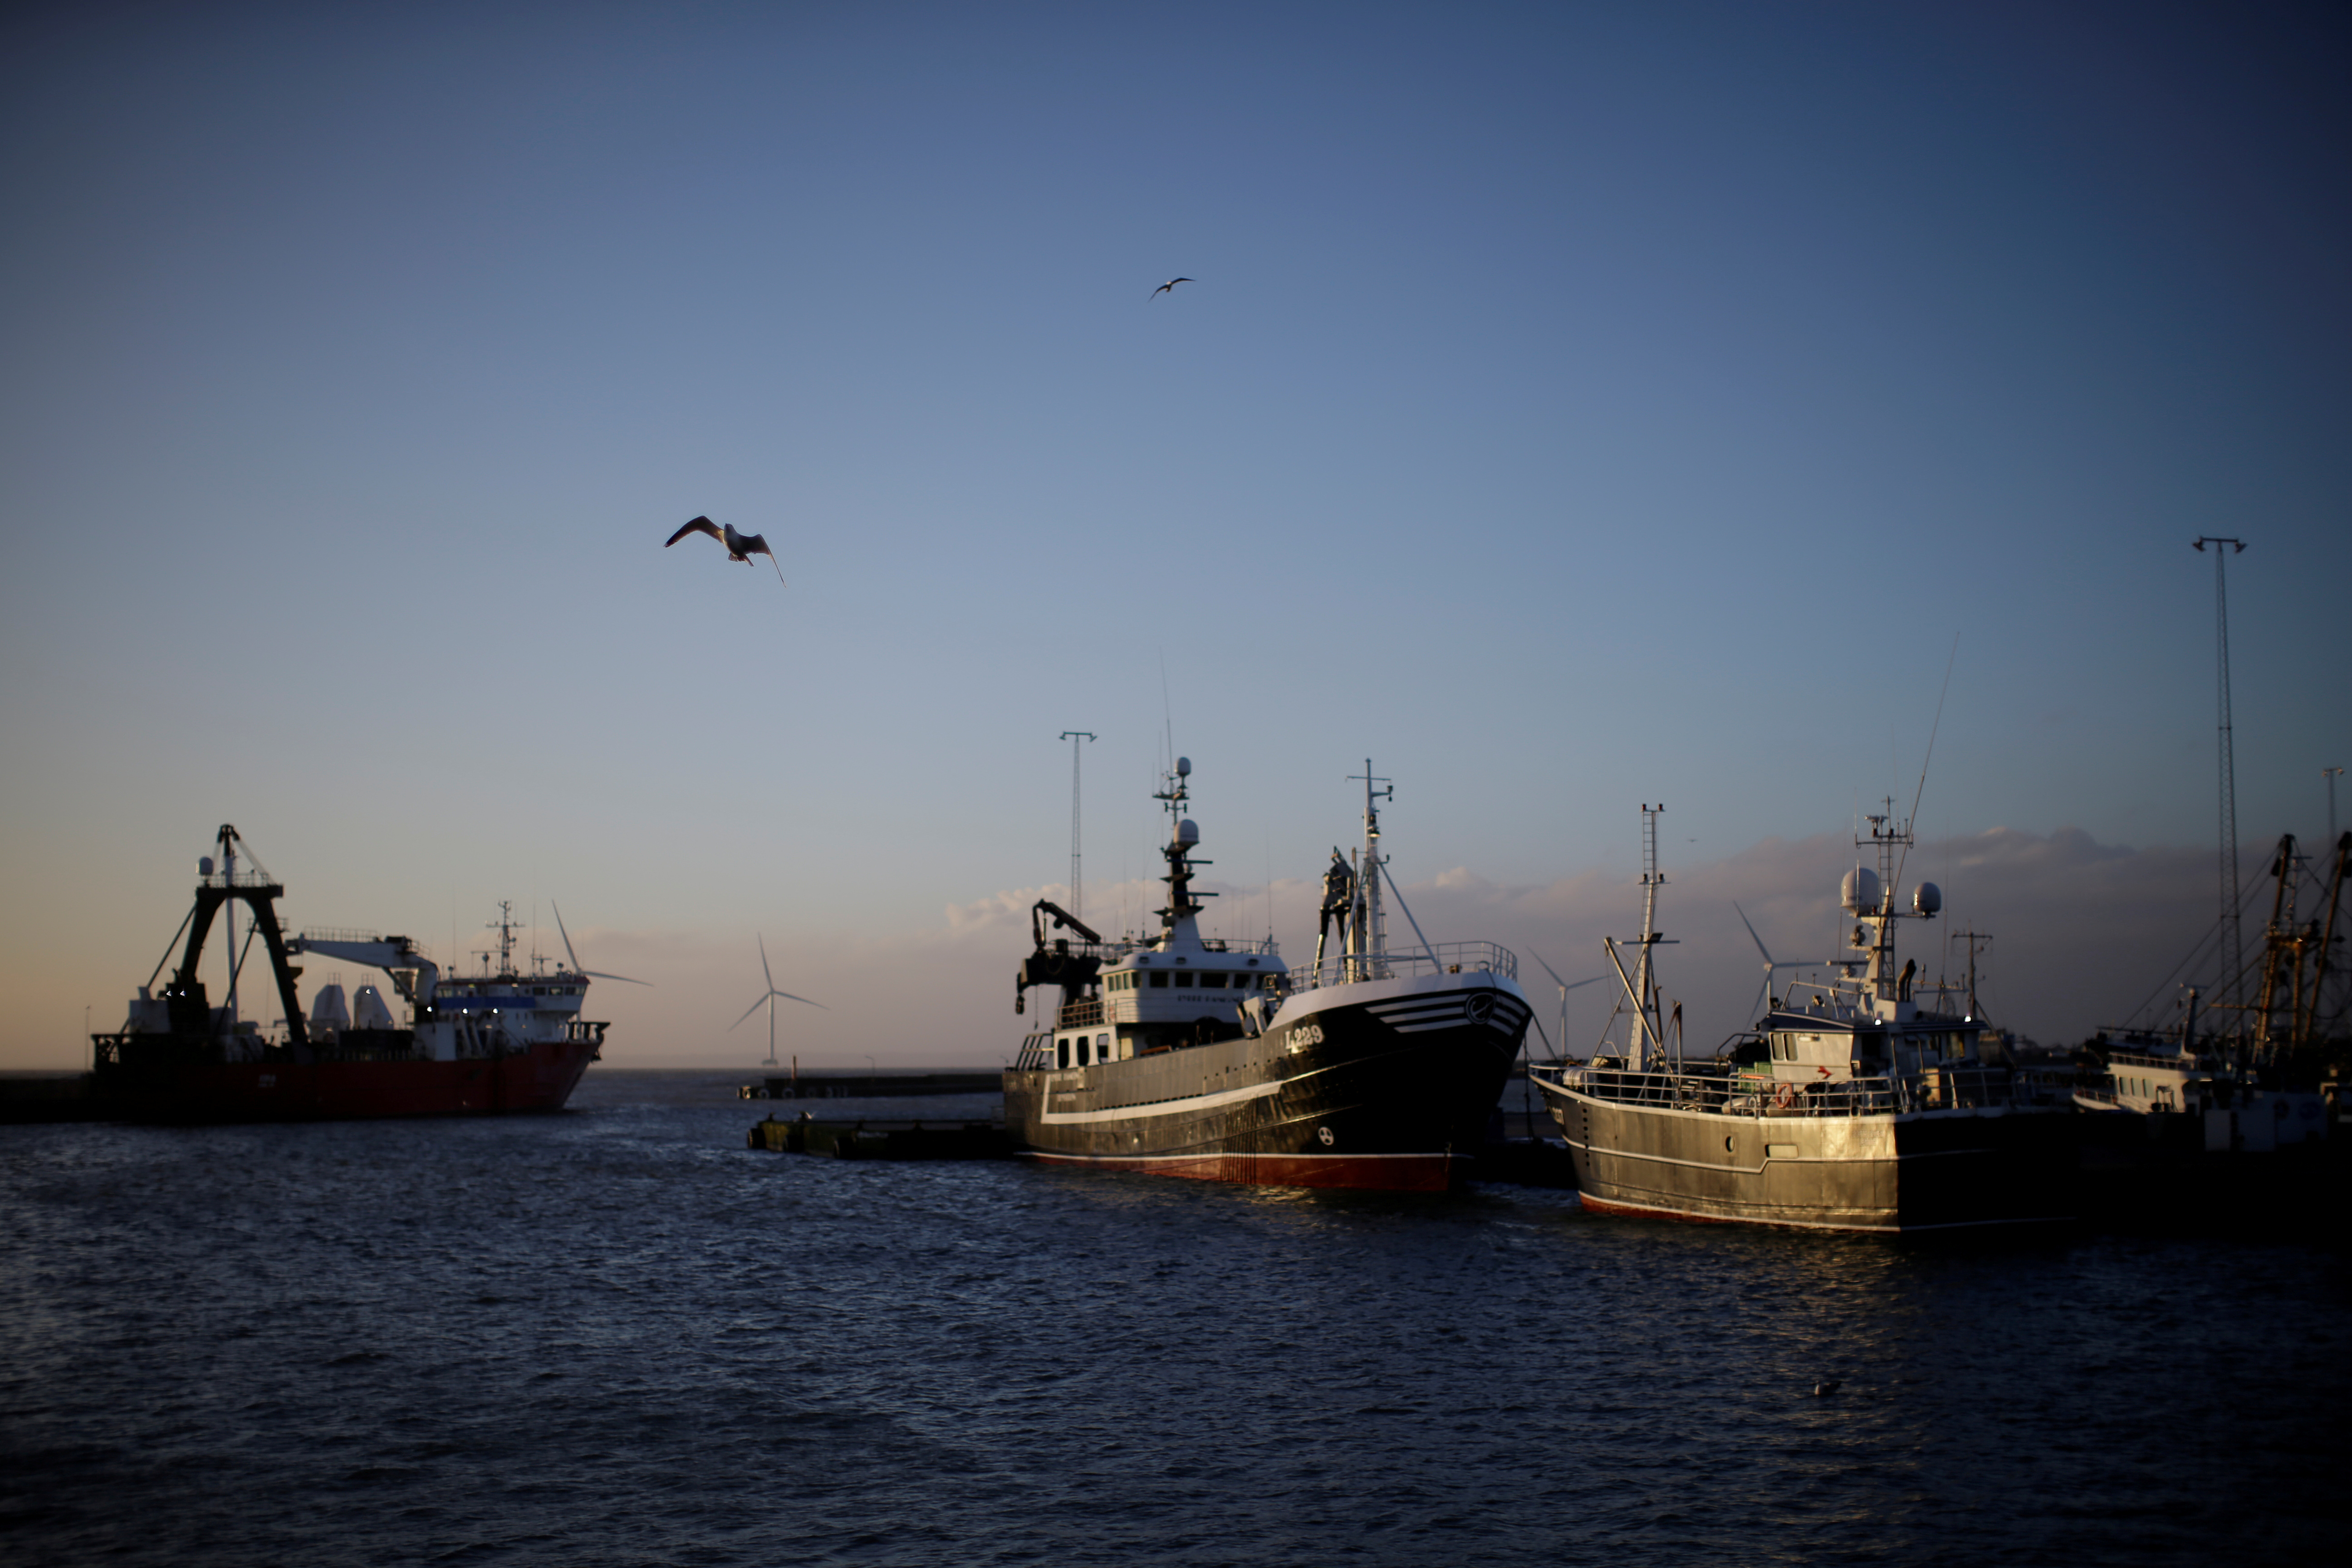 Fishing ships are seen docked at sunrise in the village of Thyboron in Jutland, Denmark